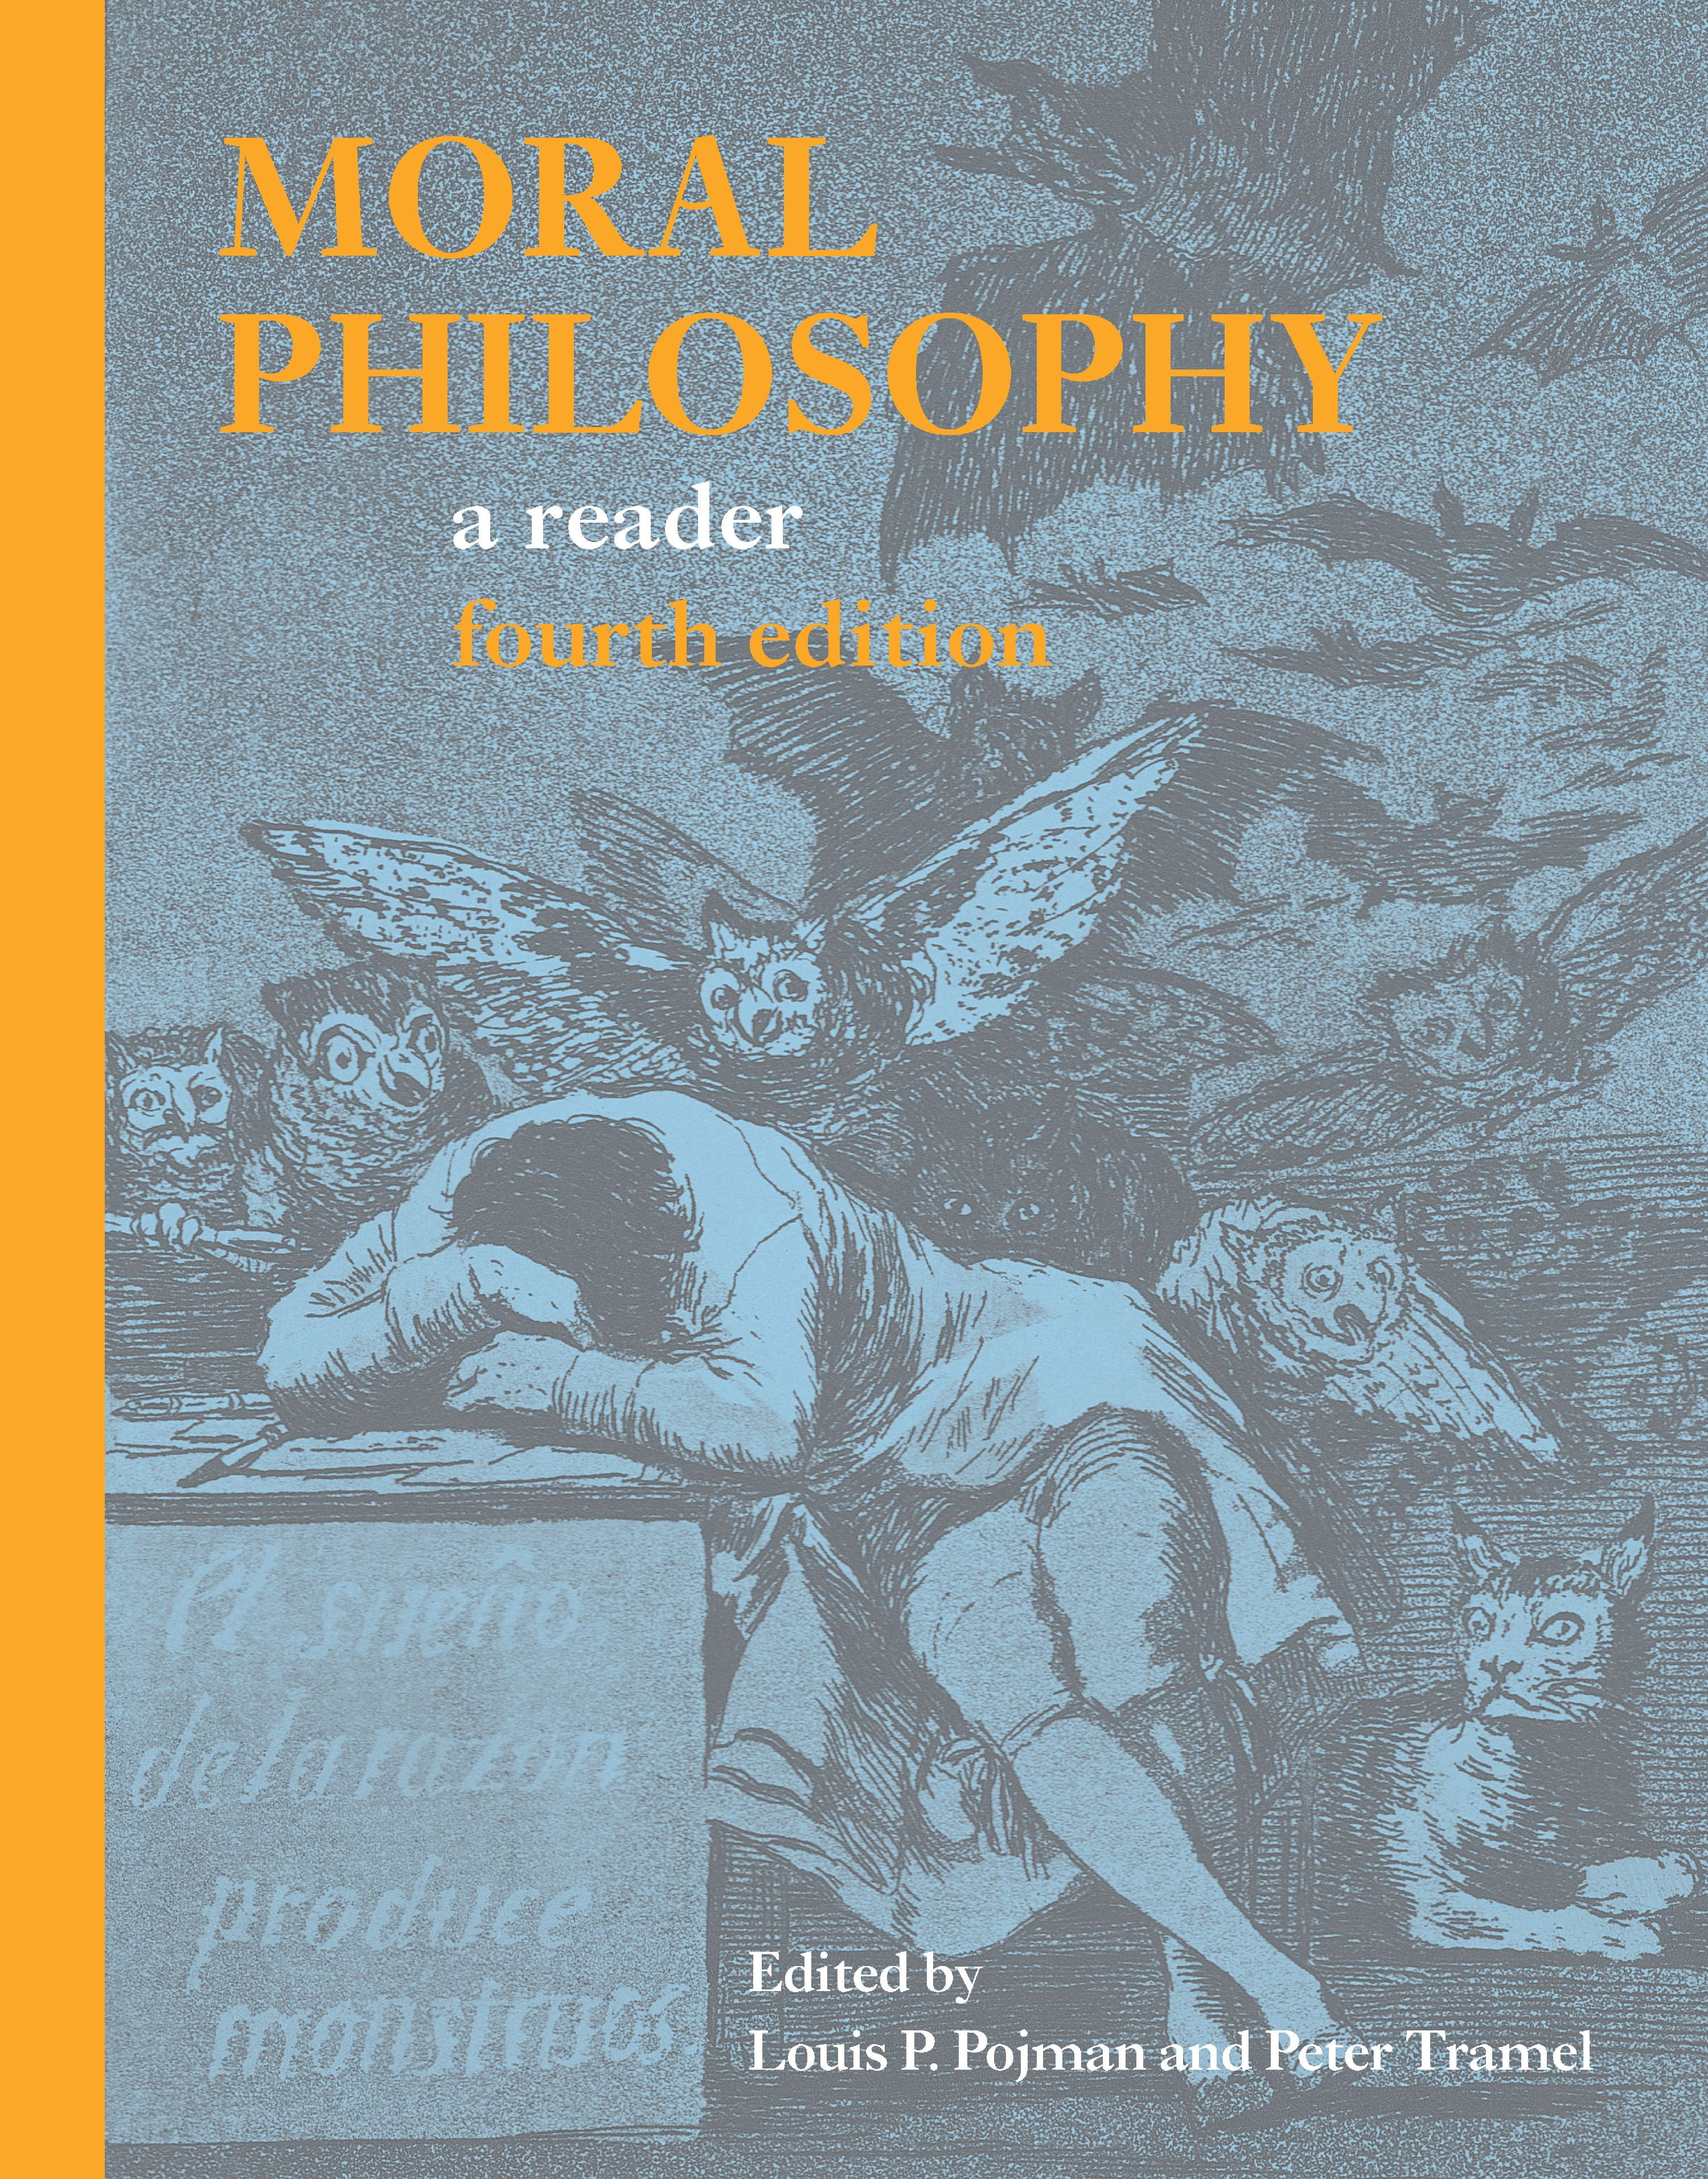 Moral Philosophy: A Reader (Edition 4) (Paperback) - Walmart.com ...